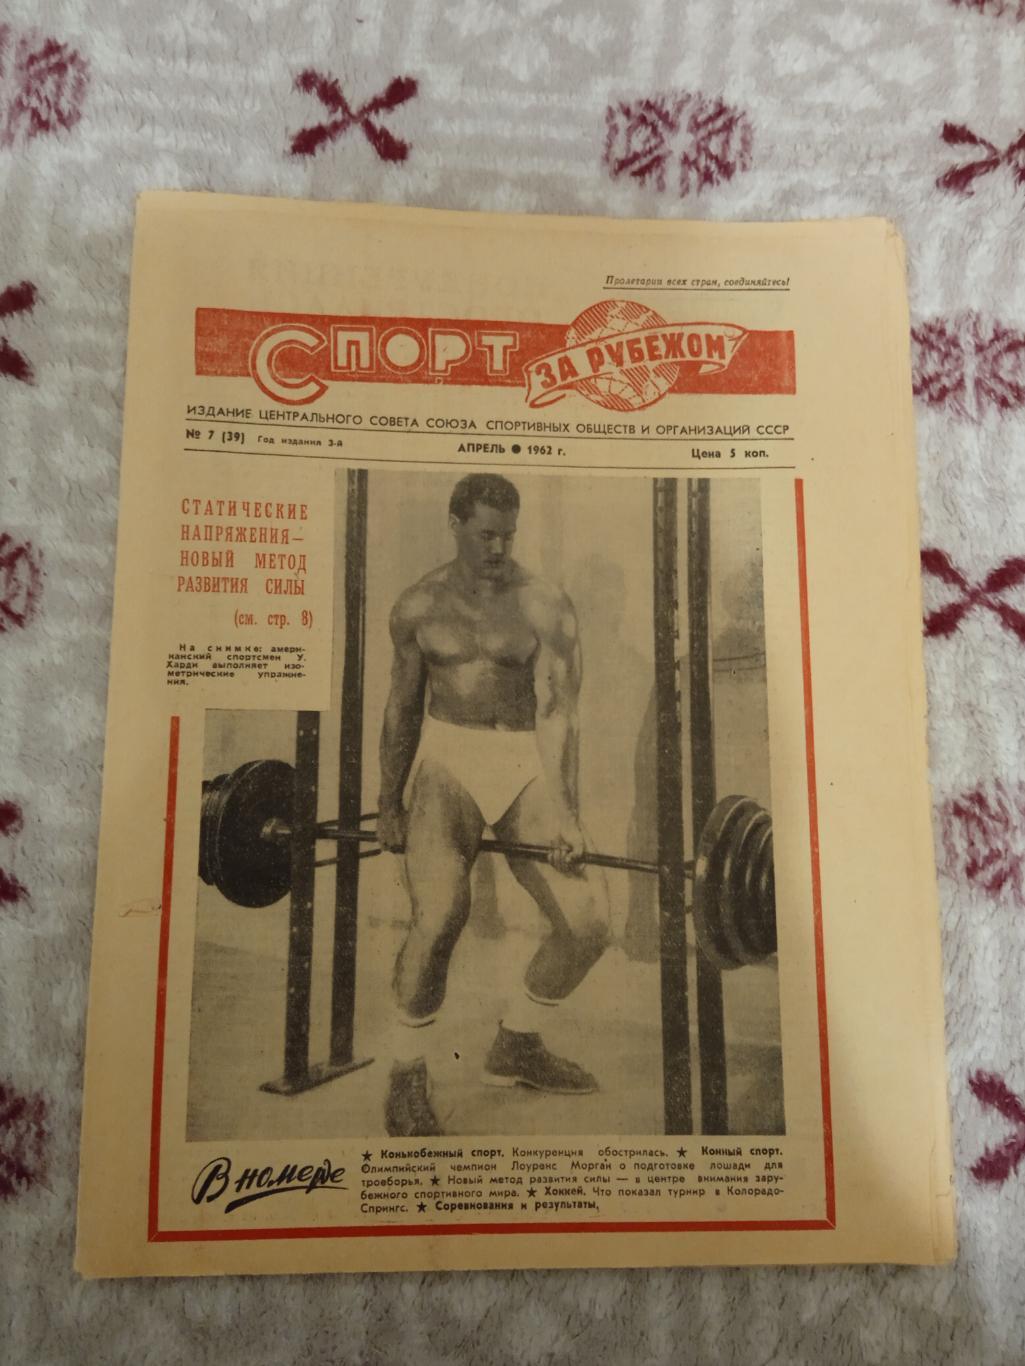 Газета.Спорт за рубежом № 7 1962 г. (Хоккей ЧМ 1962).